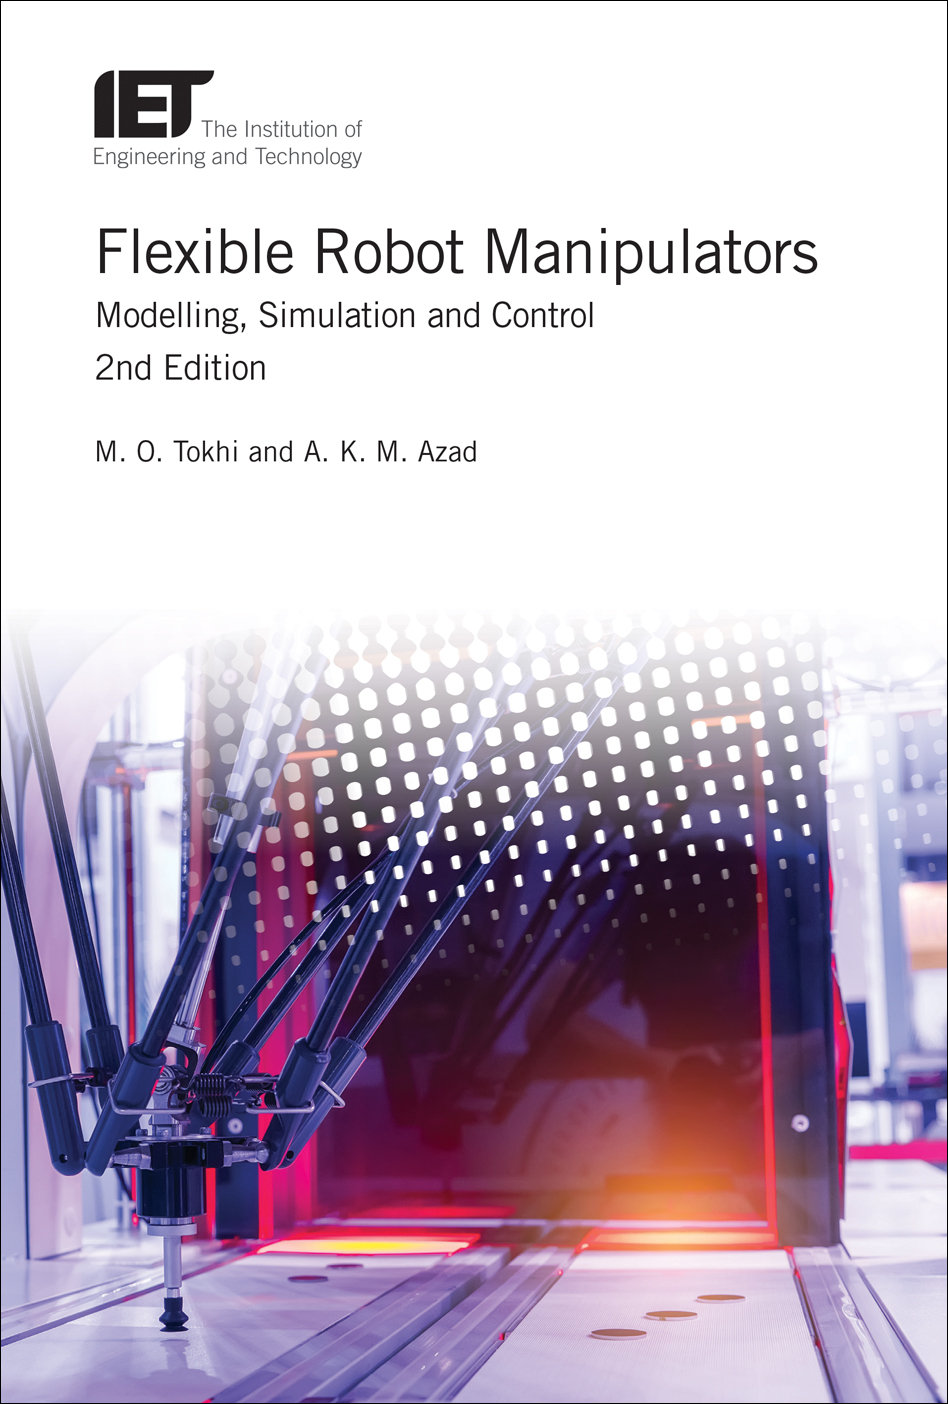 Flexible Robot Manipulators, Modelling, simulation and control, 2nd Edition